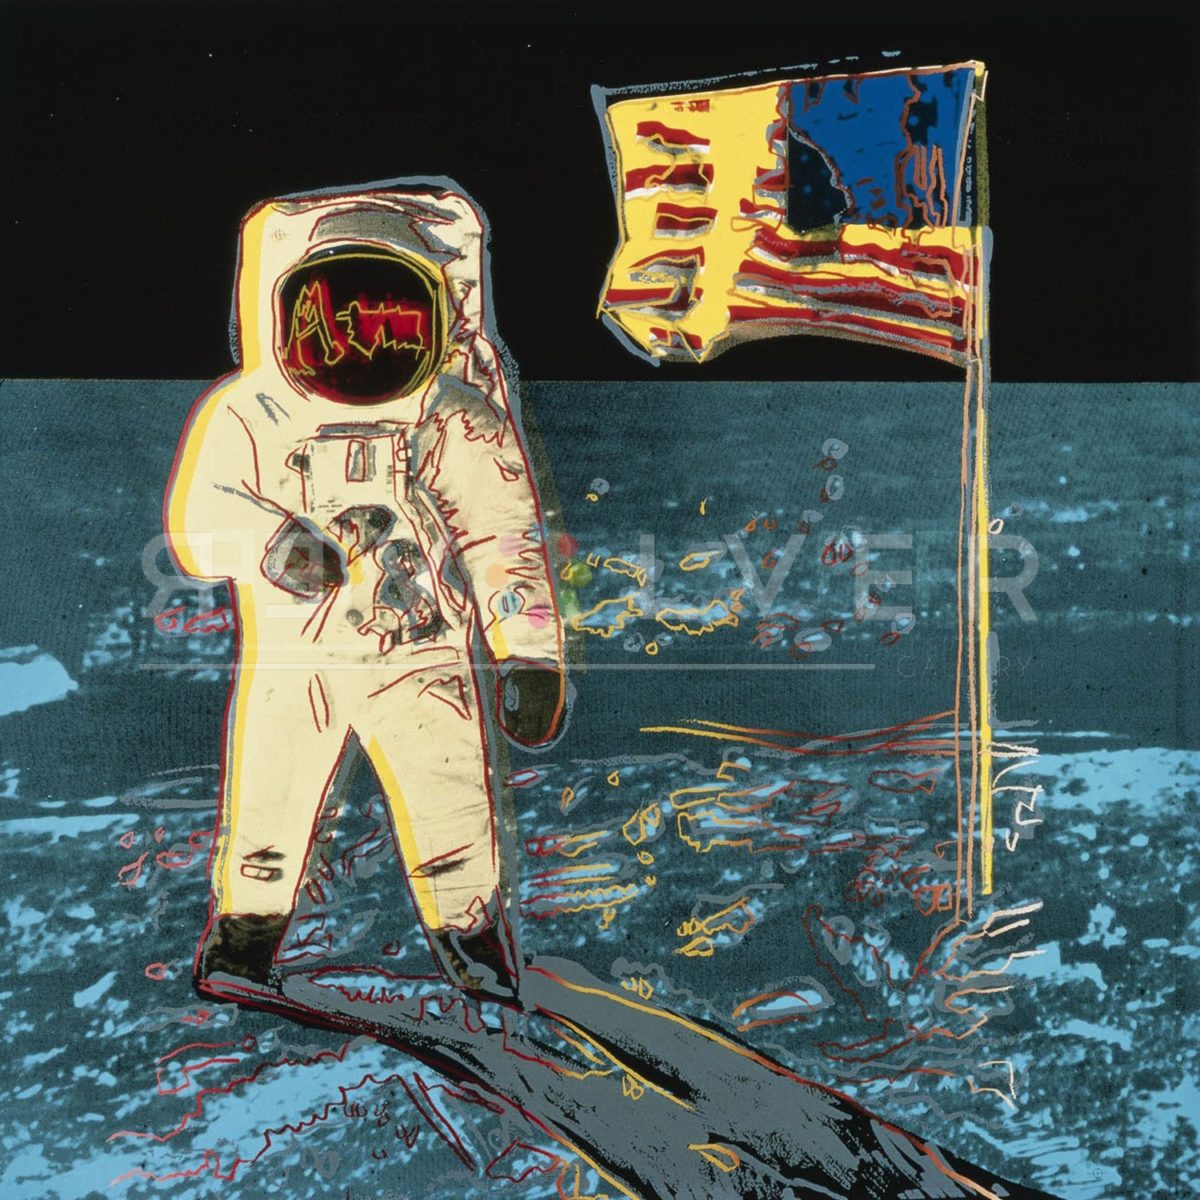 Moonwalk 404 Print by Andy Warhol | Revolver Gallery